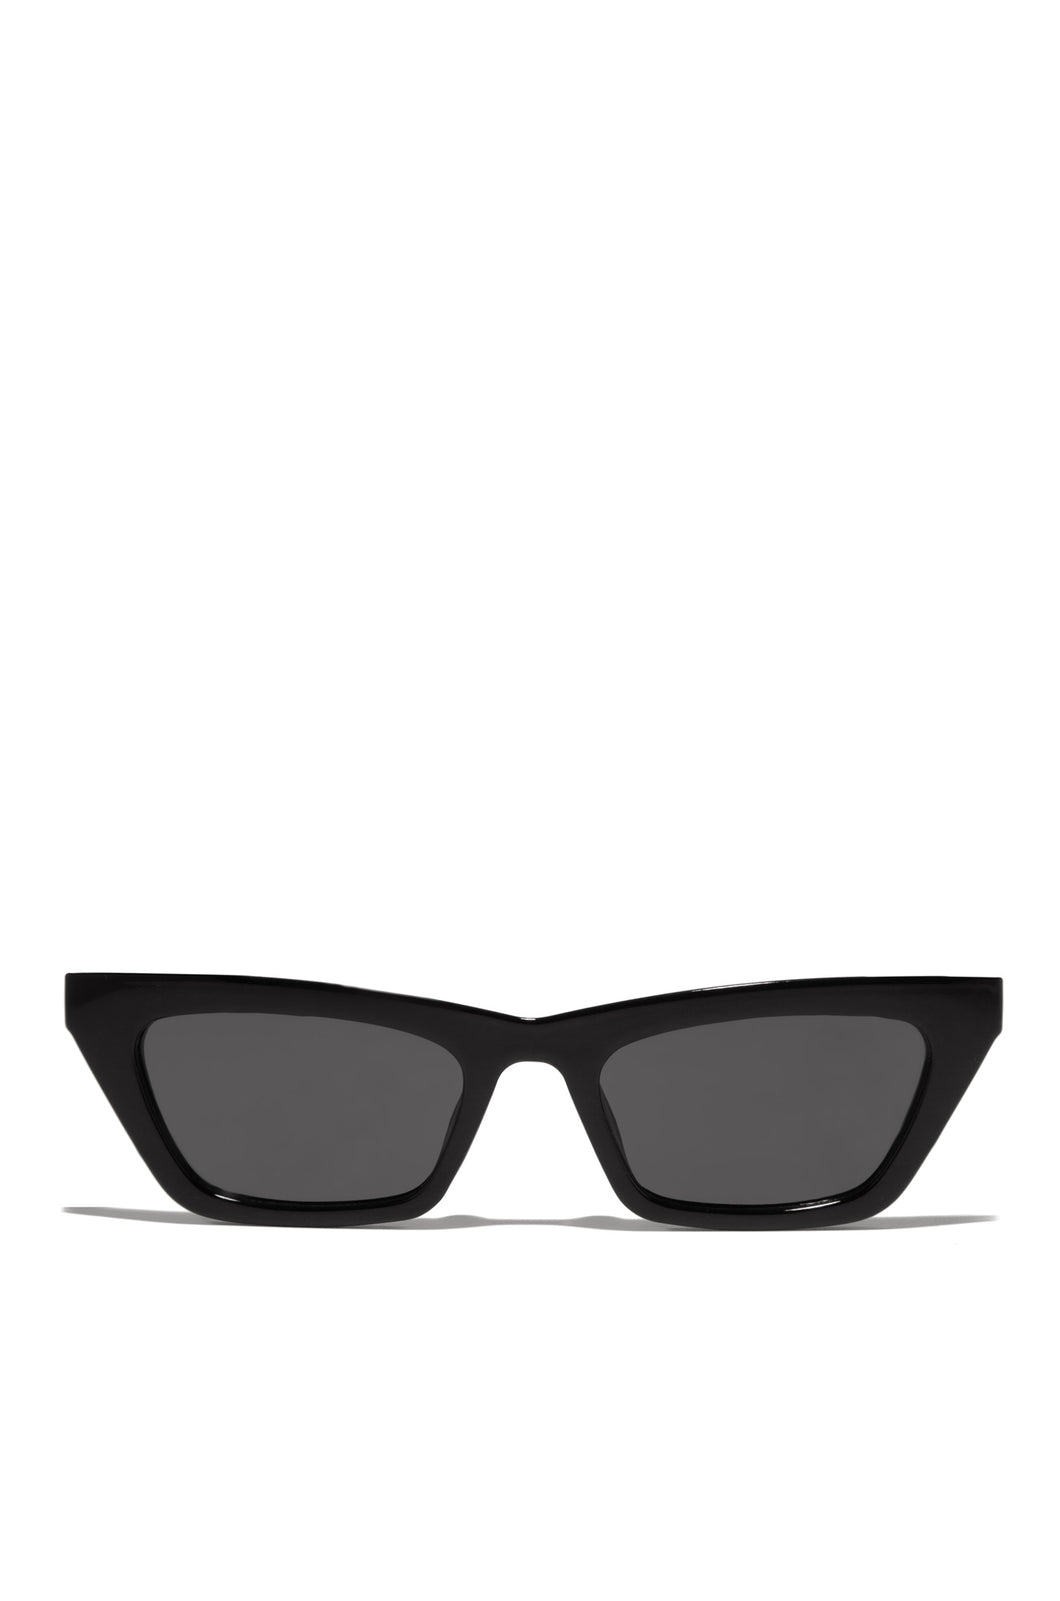 Downtown Streets Sunglasses - Black